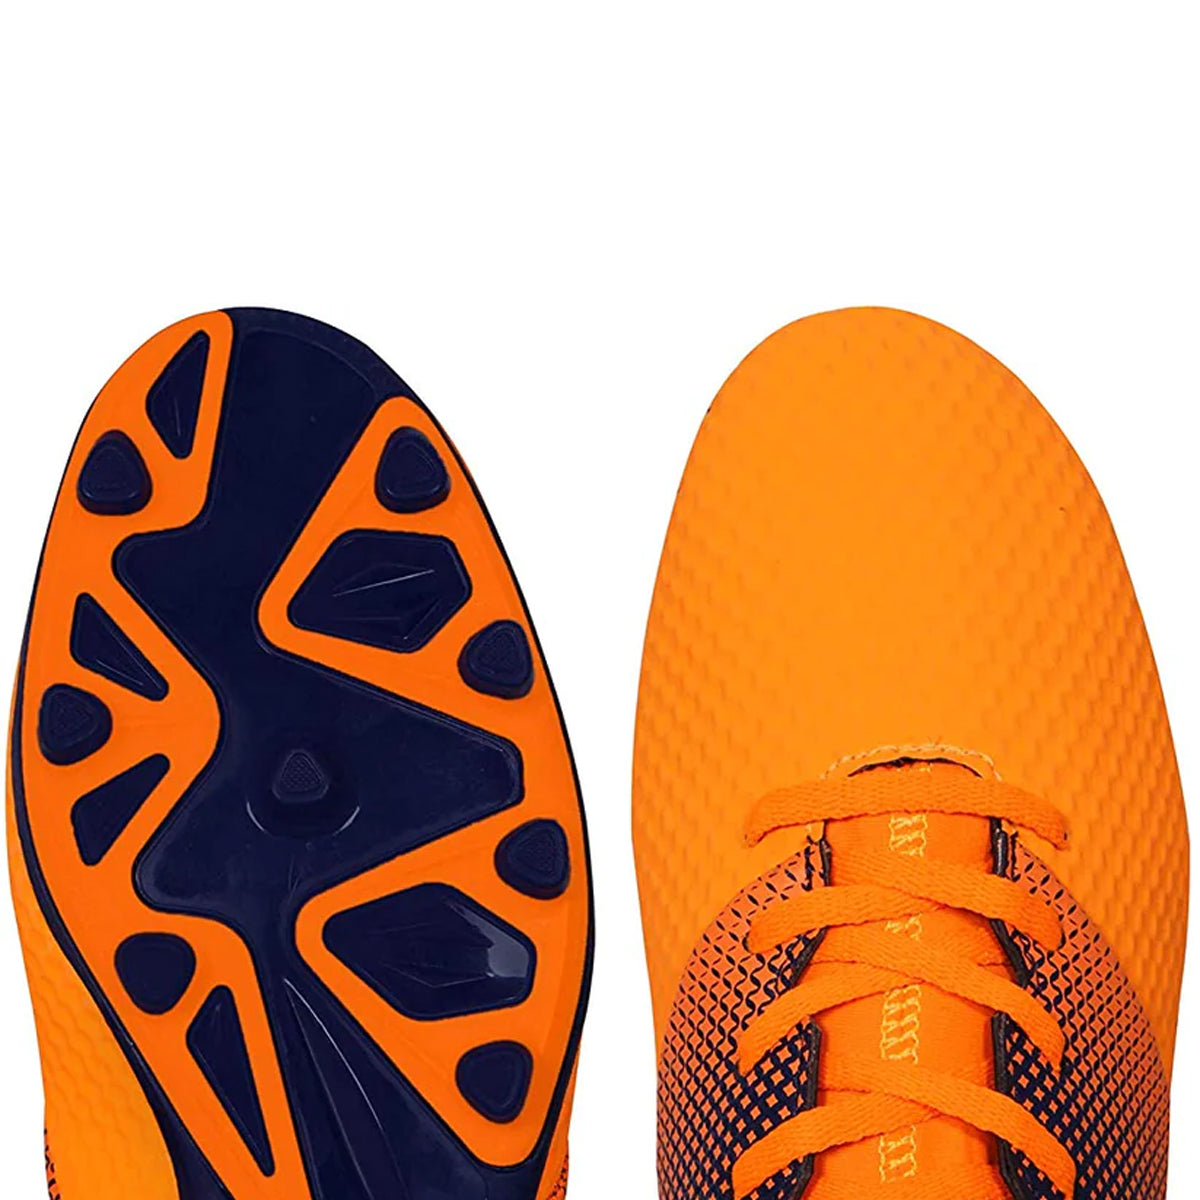 Nivia Ashtang Football Stud - Orange - Best Price online Prokicksports.com